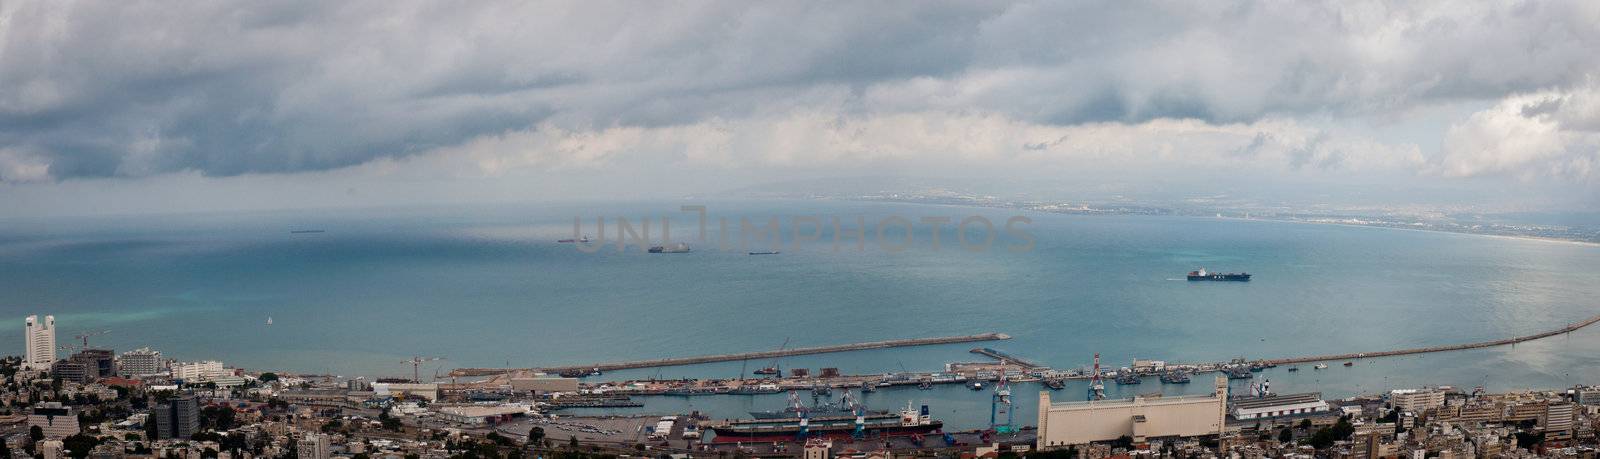 Panorama of the coast of Haifa . by LarisaP